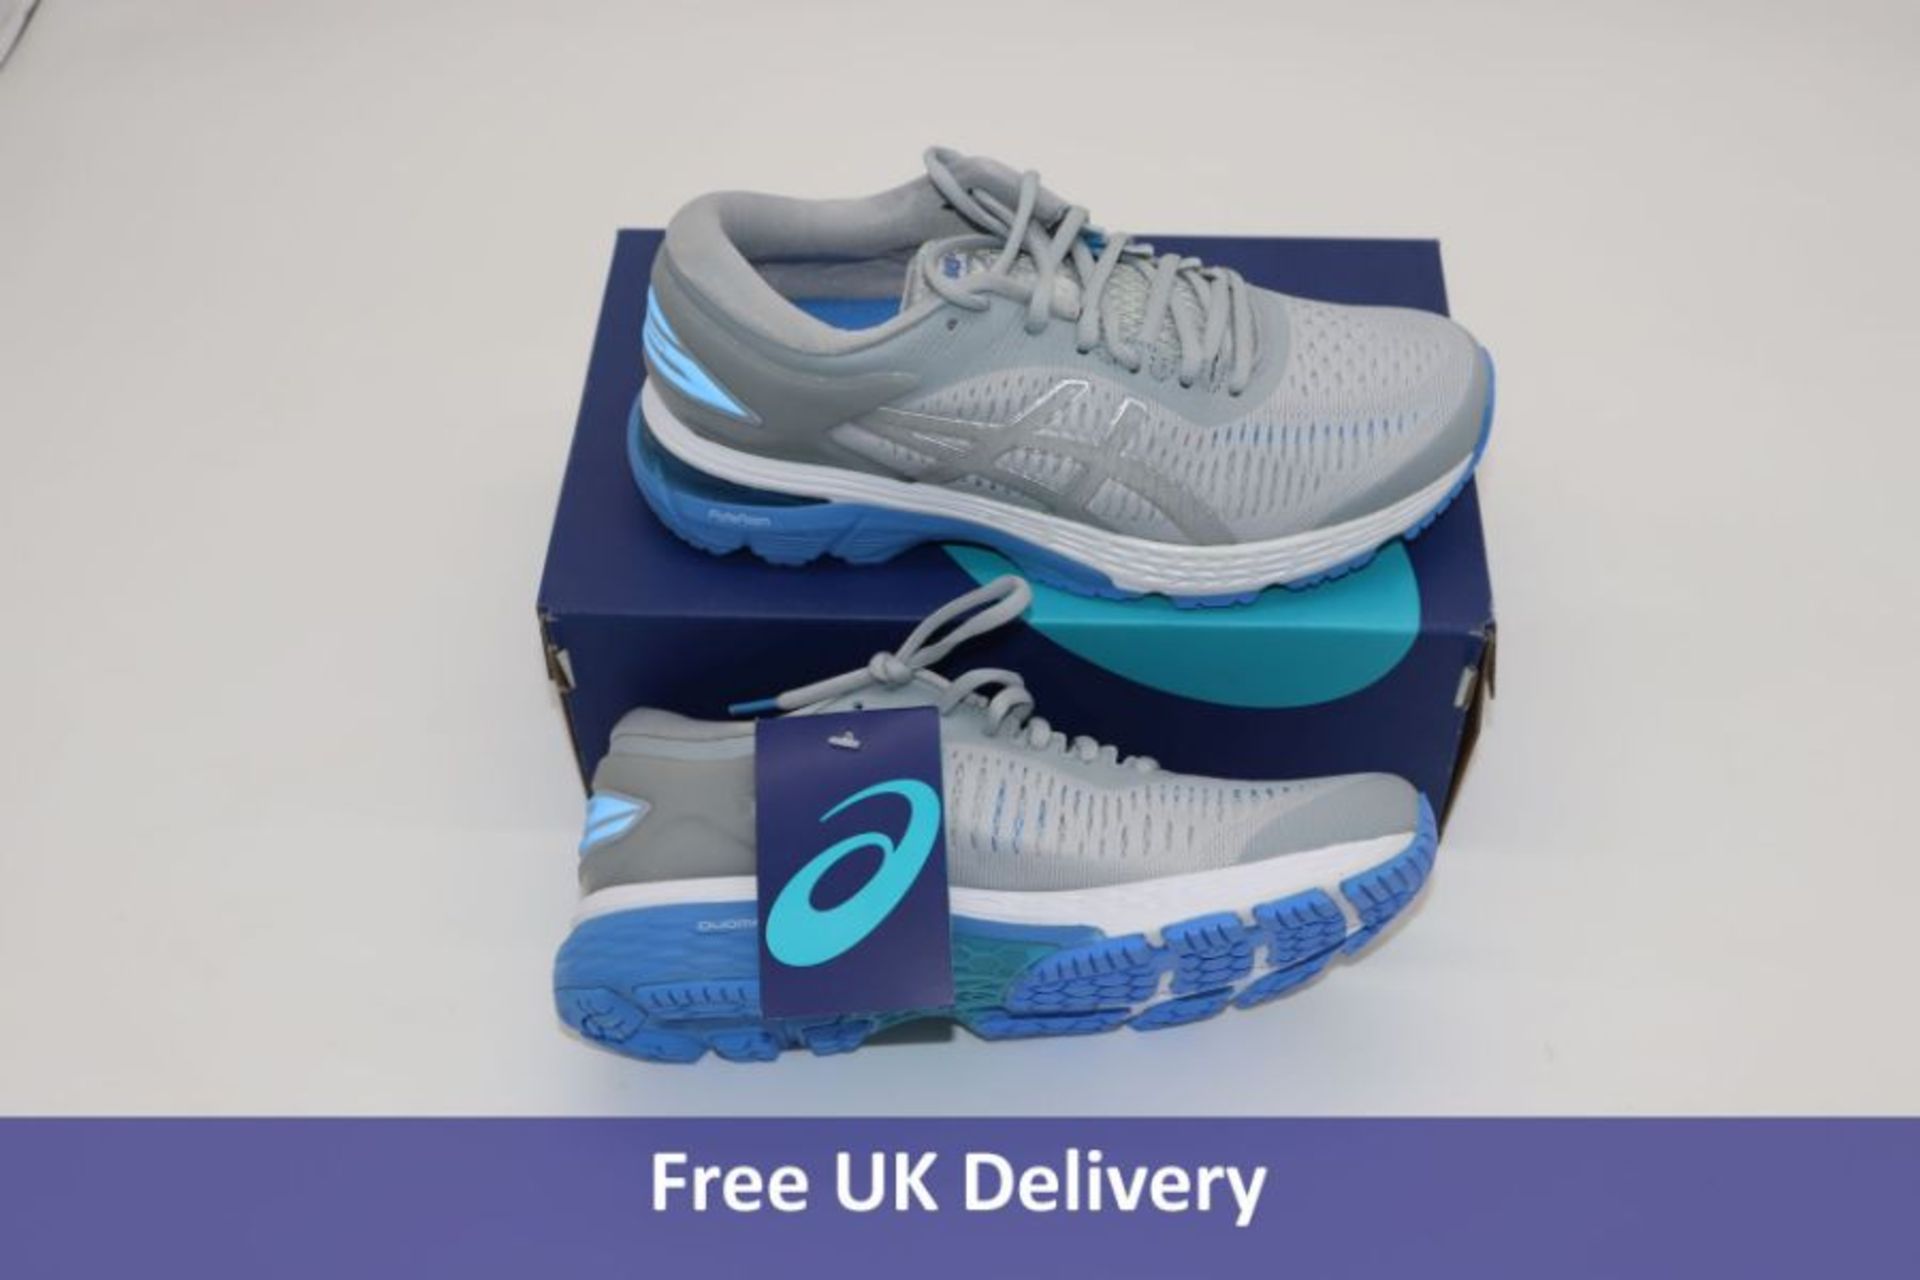 Asics Gel Kayano 25 Women's Running Shoes, Mid Grey/Blue Coast, UK 5.5